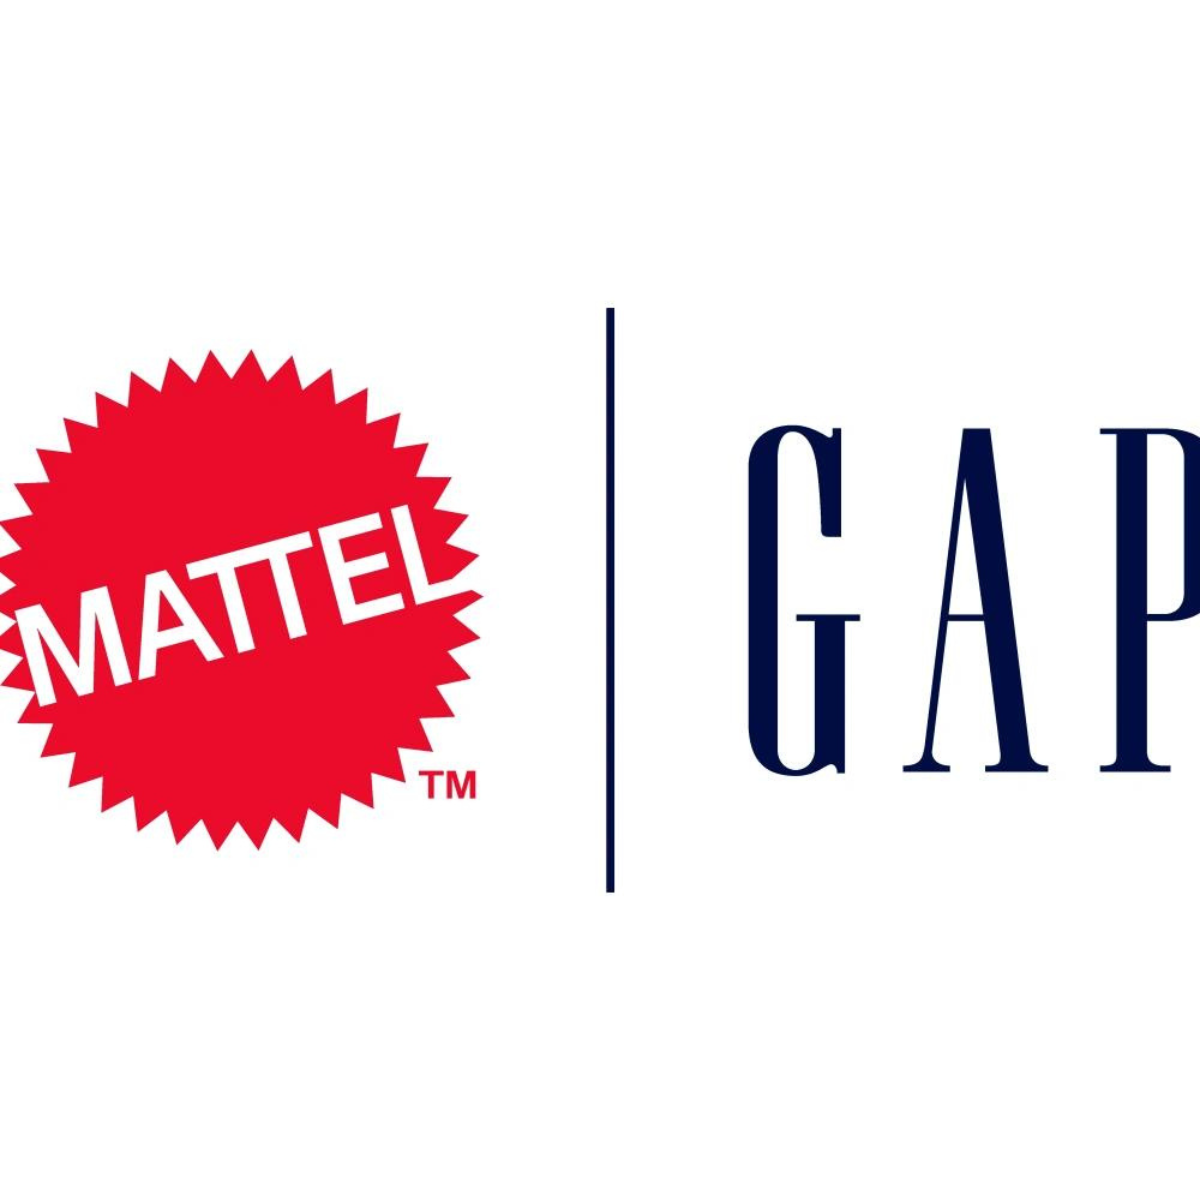 Mattel and Gap Announce New Partnership